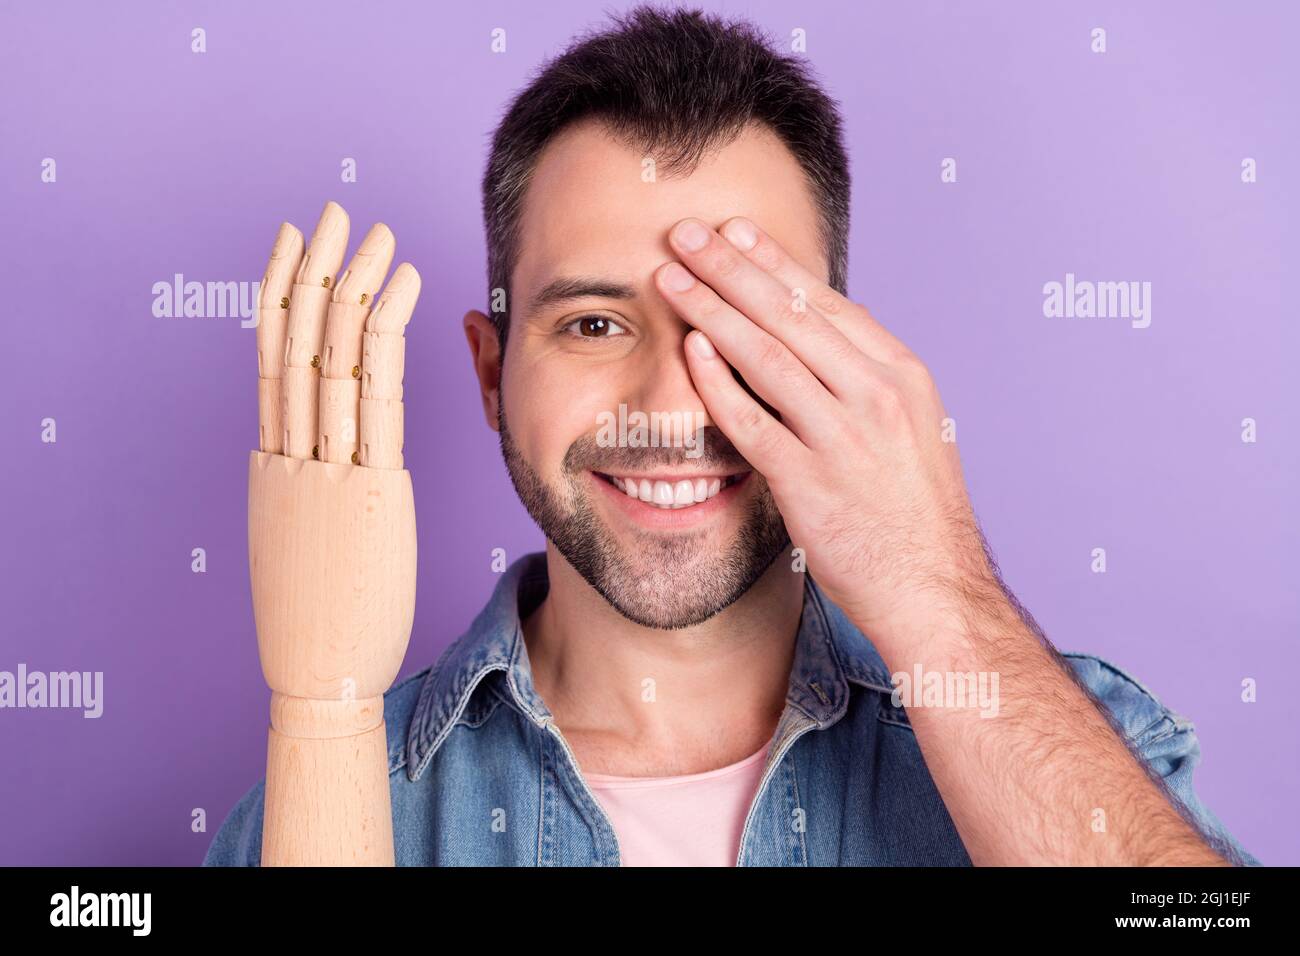 Foto del joven feliz sonrisa positiva ojo cercano mano mostrar prótesis amputado aislado sobre fondo de color púrpura Foto de stock